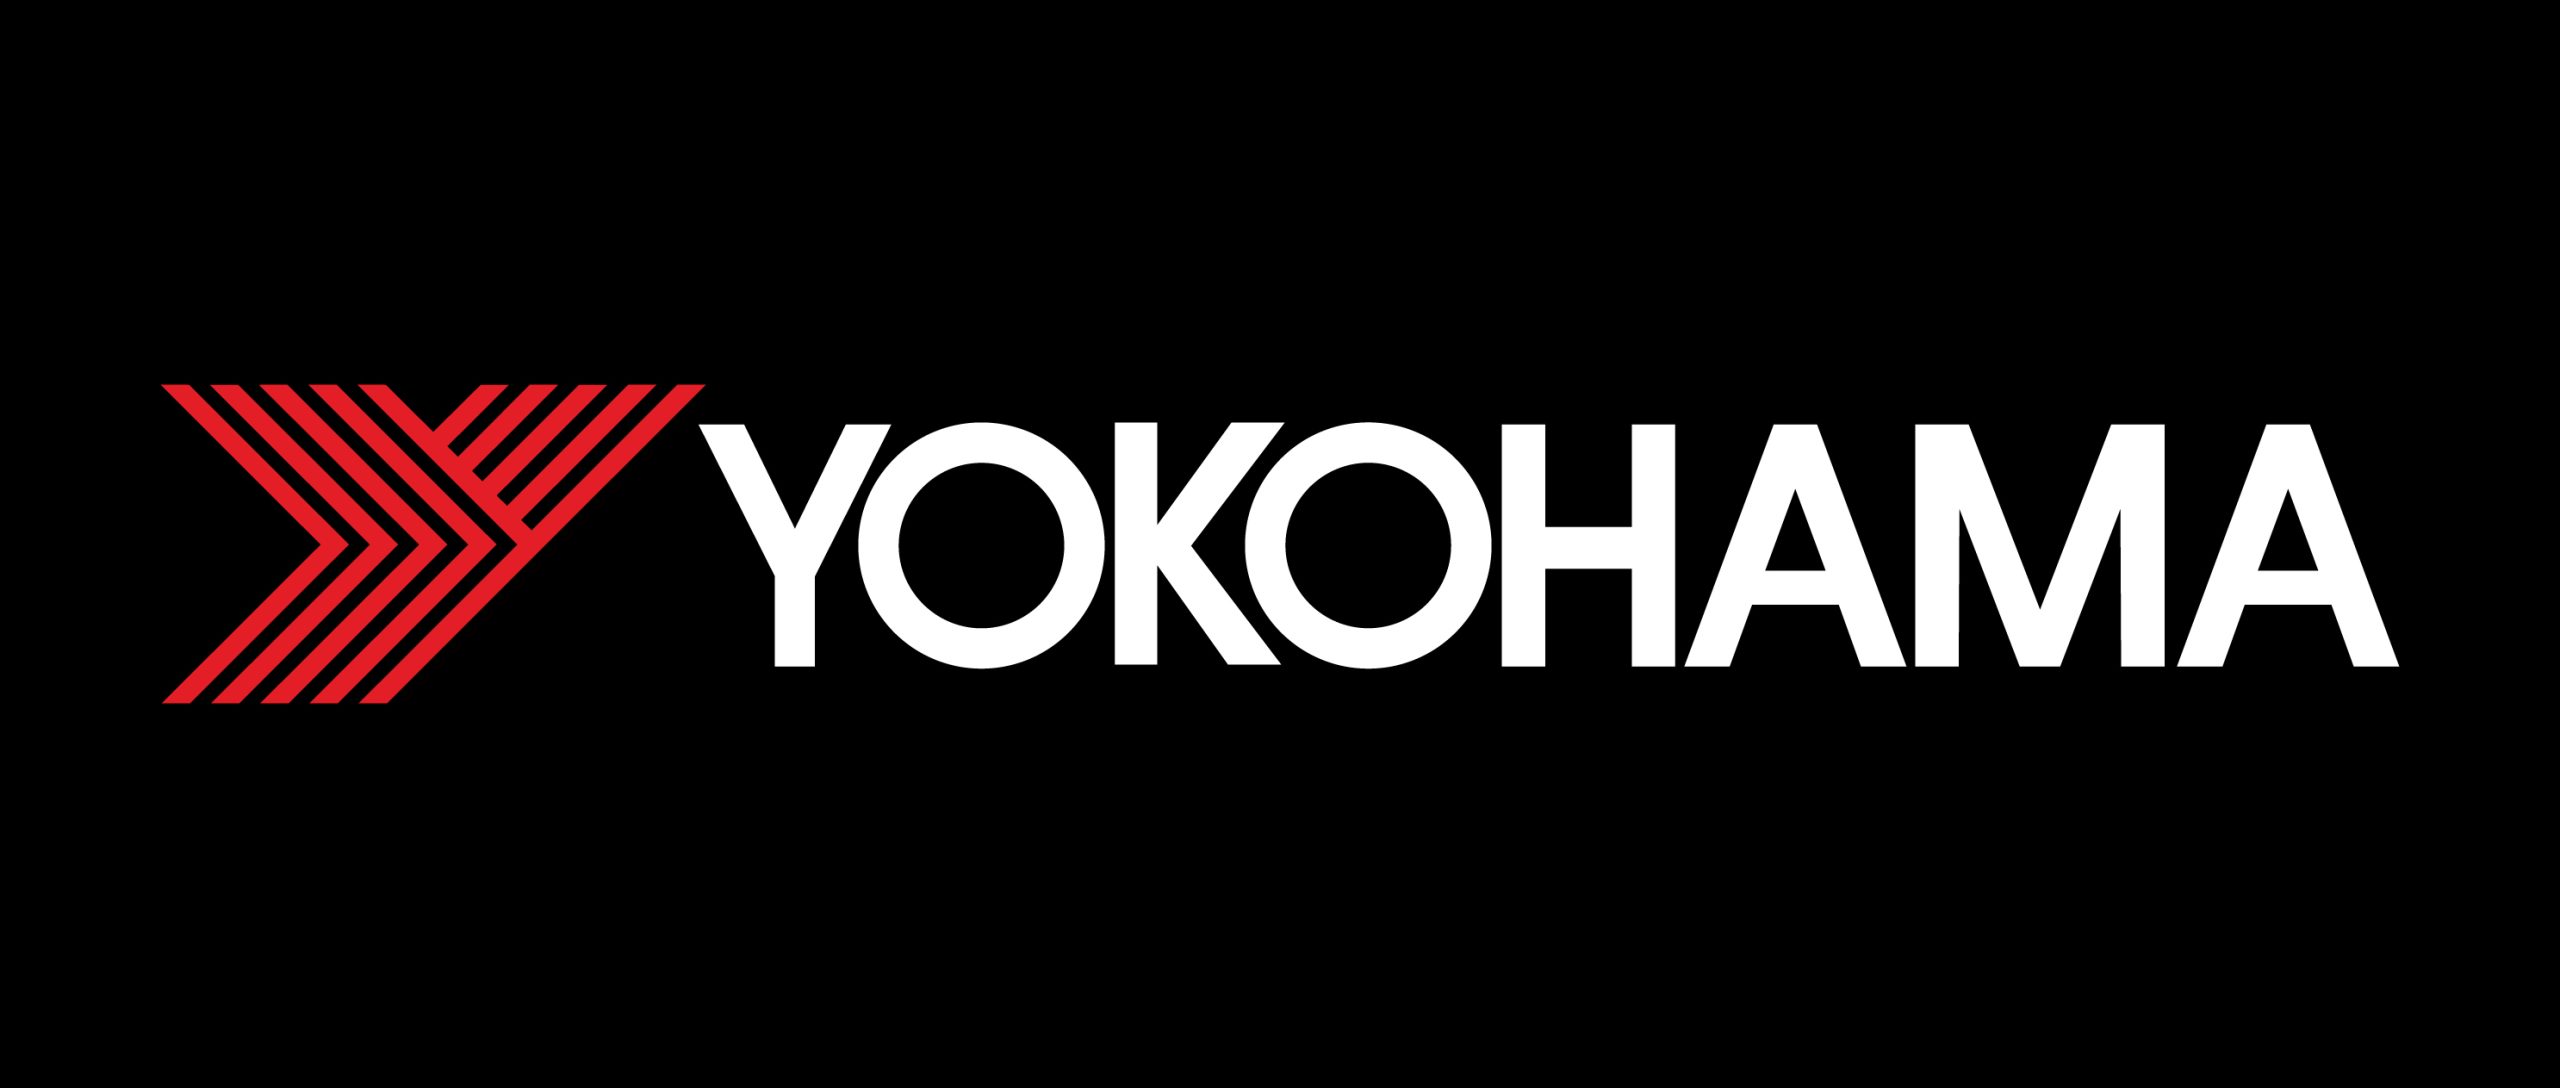 YOKOHAMA_logo